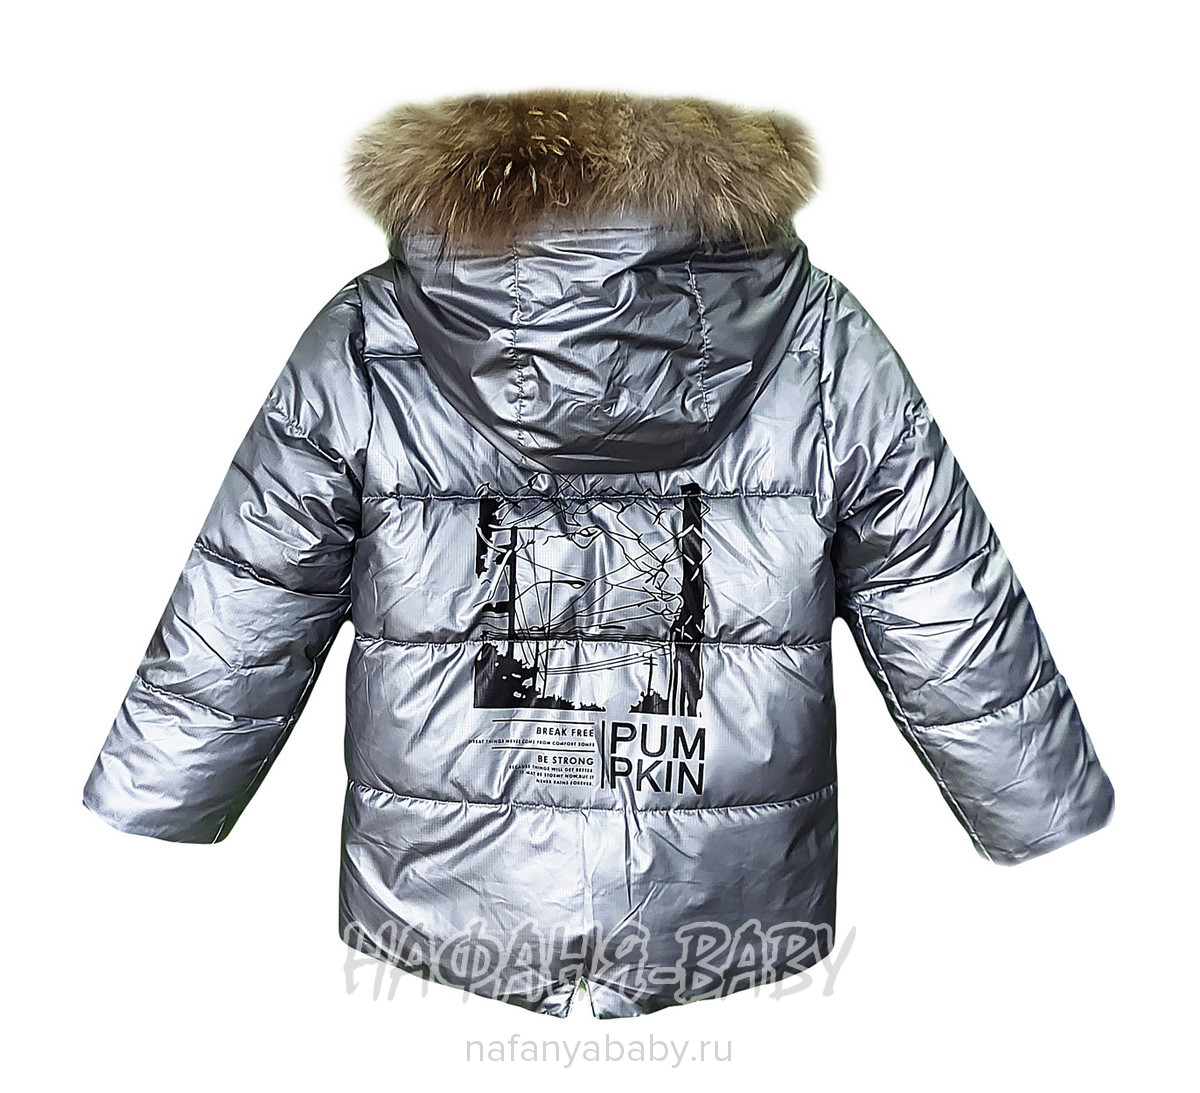 Зимний костюм DELFIN FREE, купить в интернет магазине Нафаня. арт: 2290.